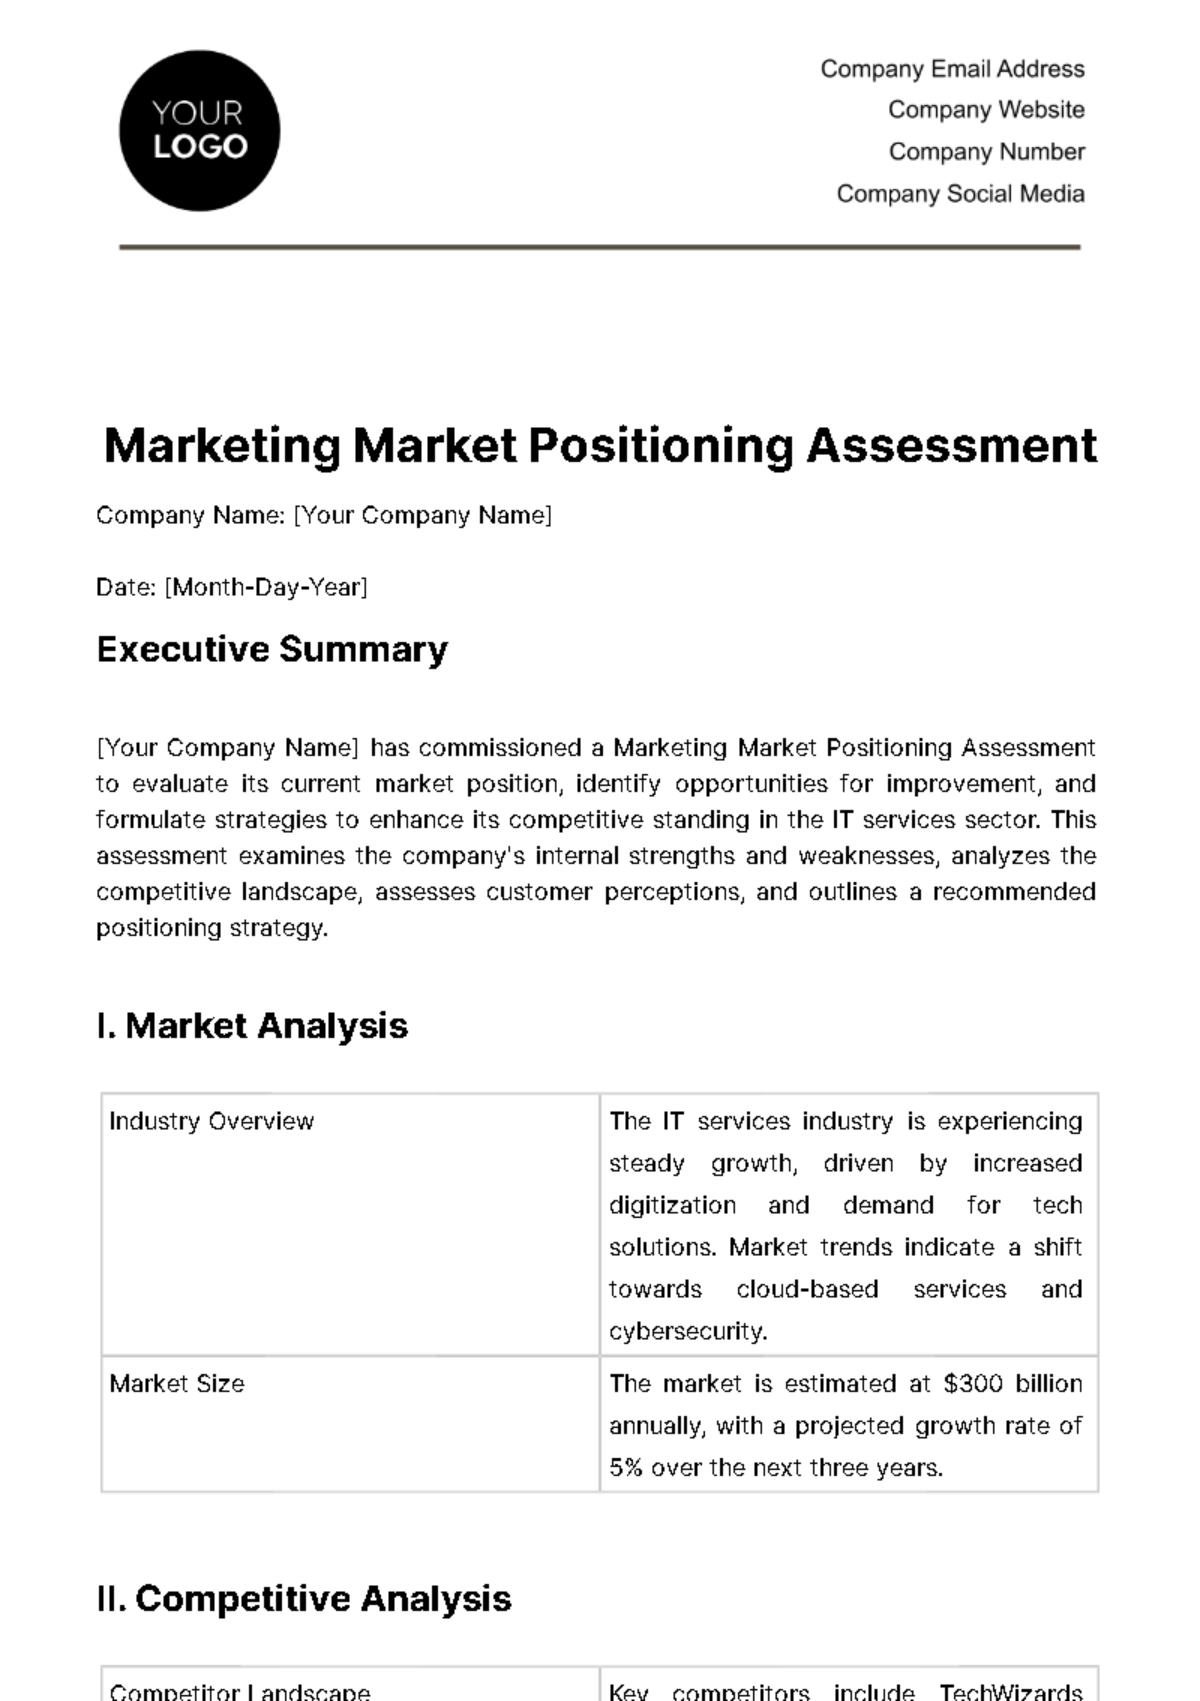 Marketing Market Positioning Assessment Template